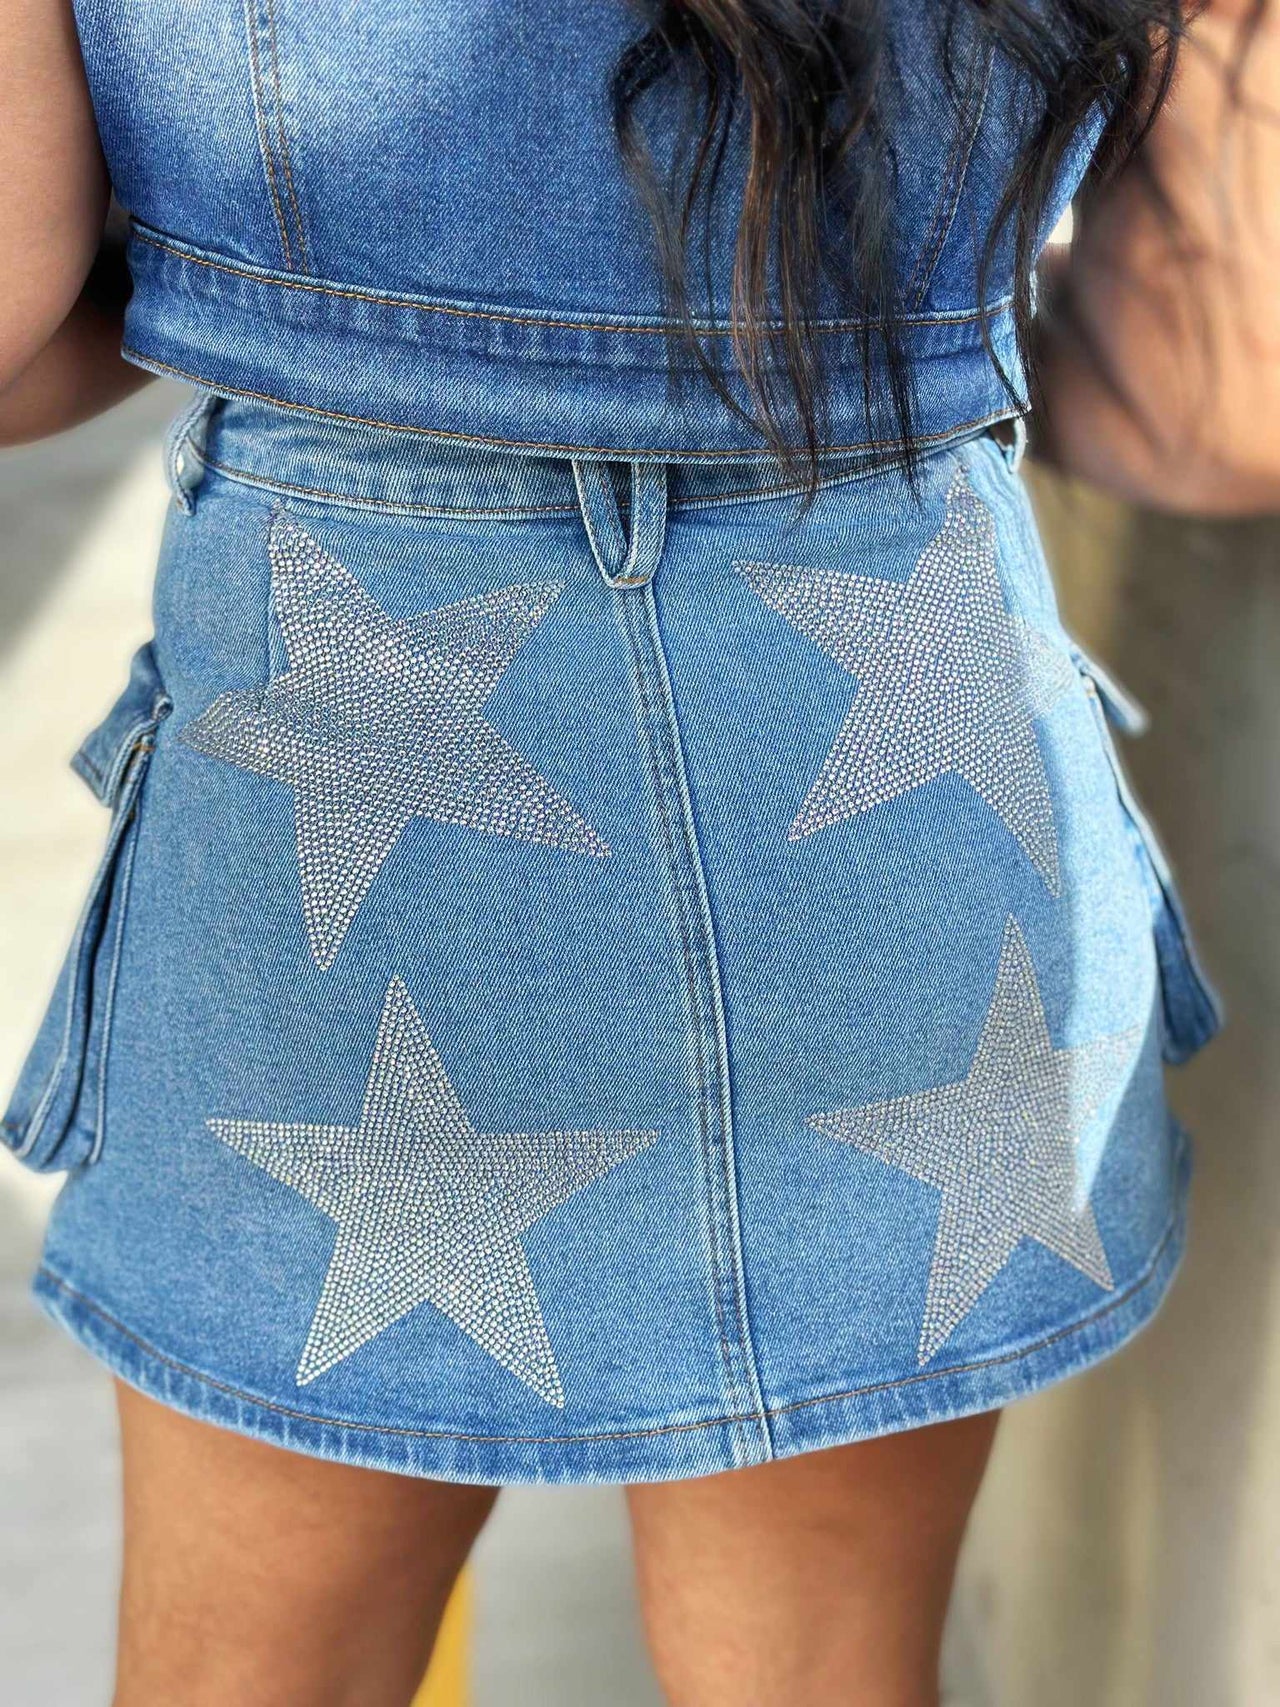 Cargo jean skirt with rhinestone stars